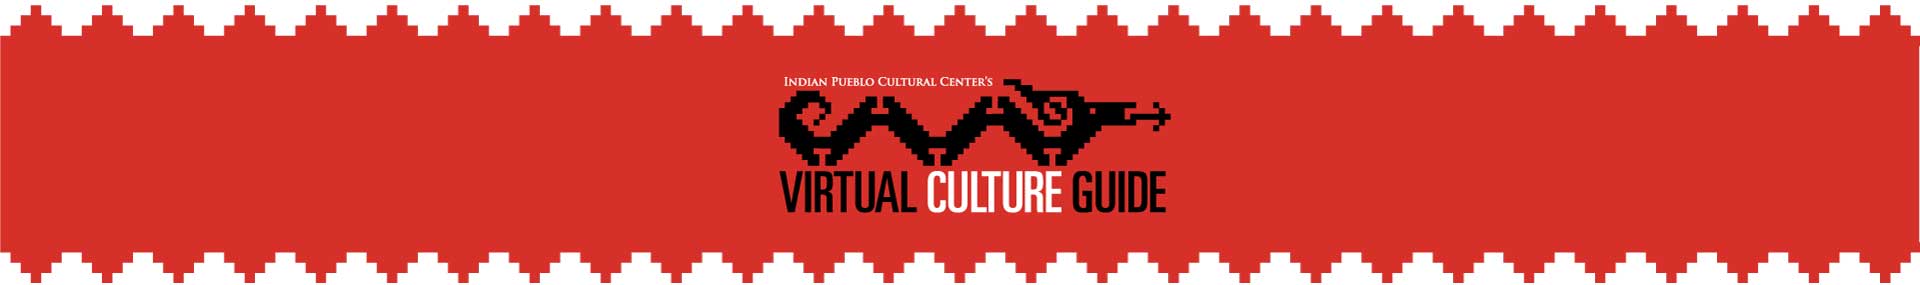 IPCC's Virtual Culture Guide